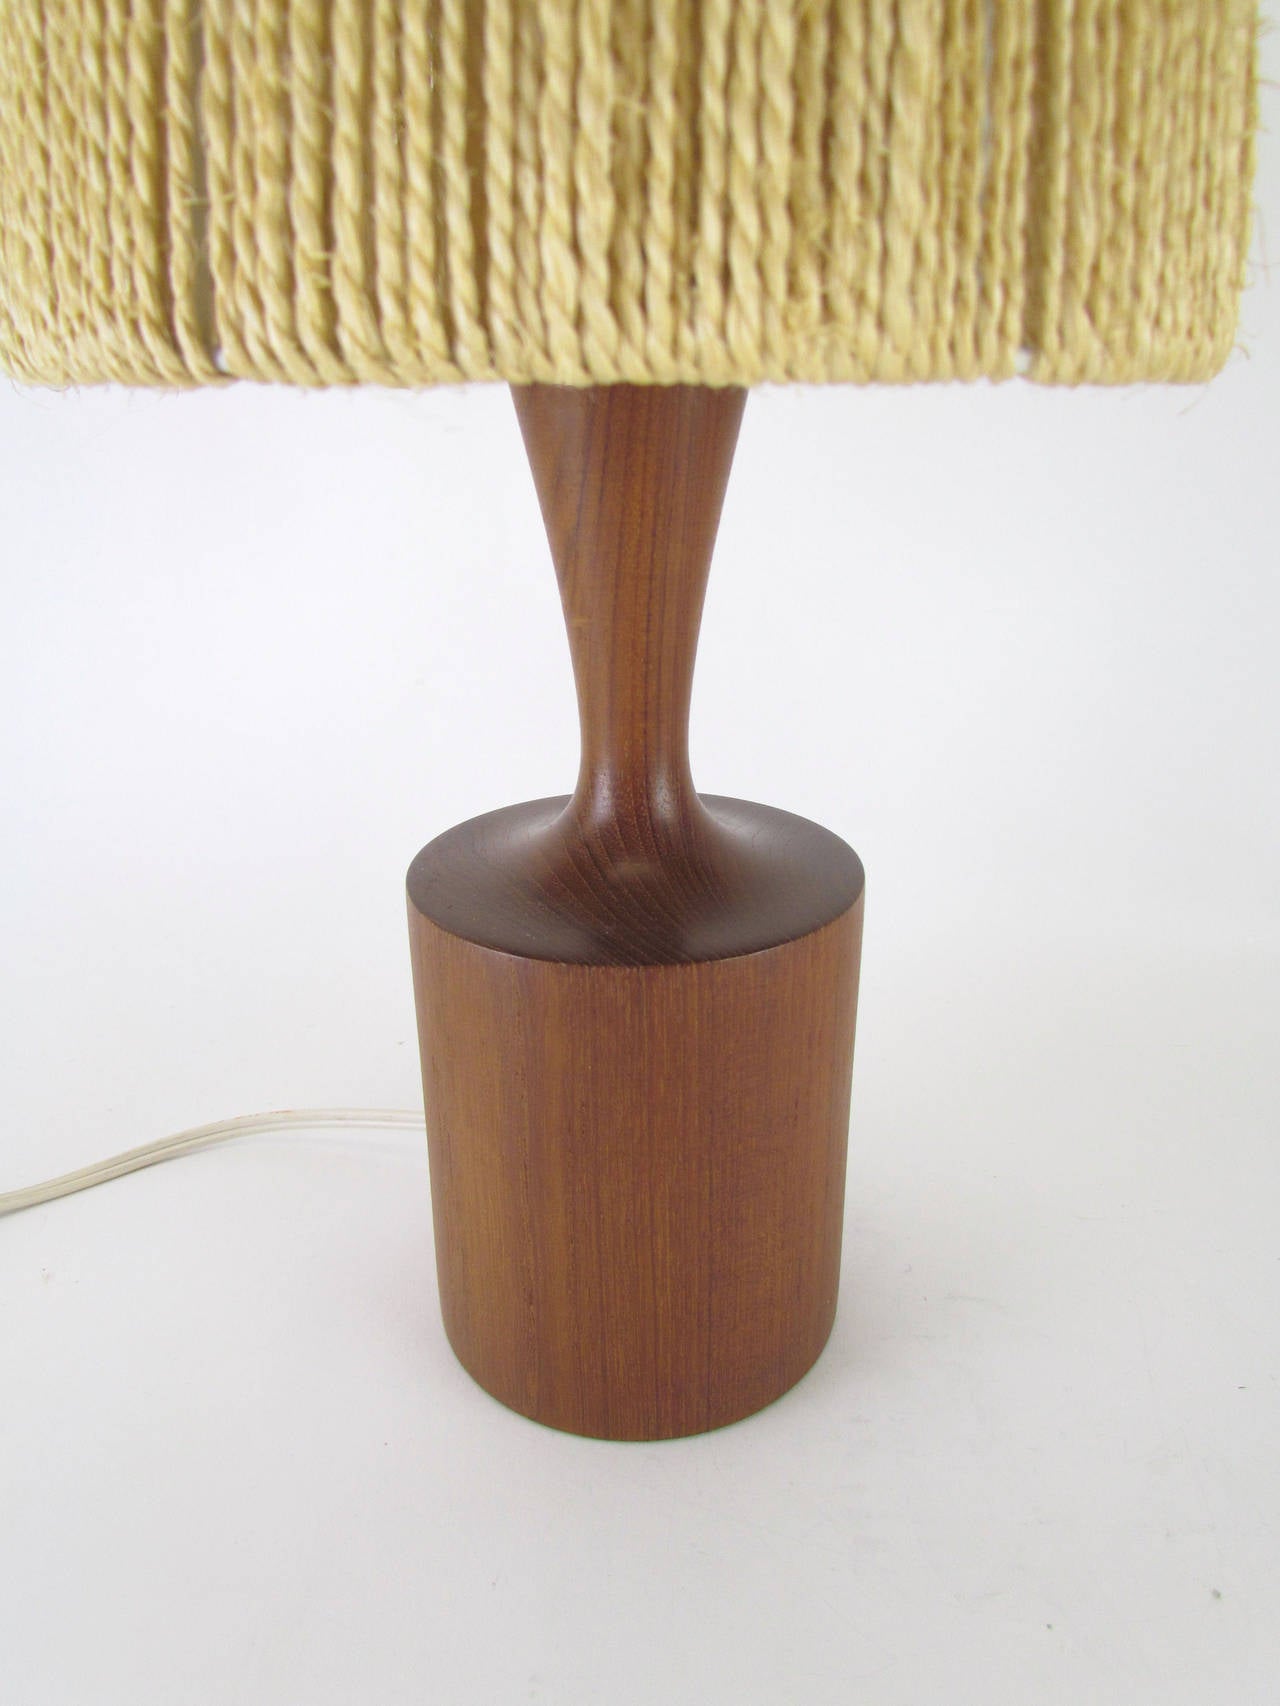 Scandinavian Modern Danish Accent Table Lamp in Jute and Teak by Fog & Mørup